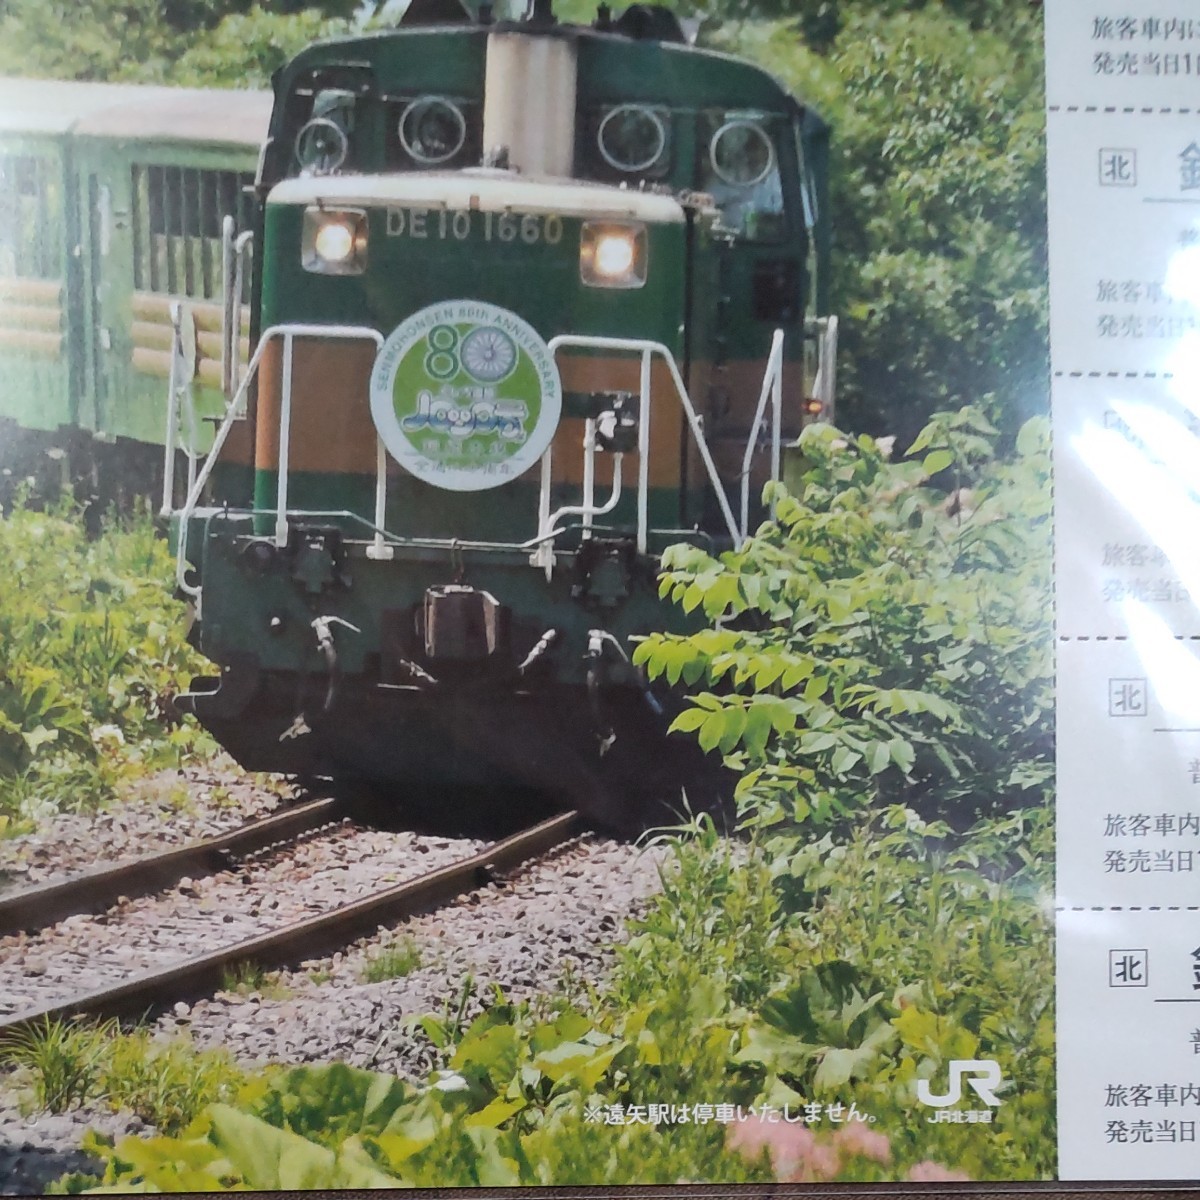 JR北海道 原生花園 キハ ノロッコ号 オレンジカード 3枚セット 使用済み